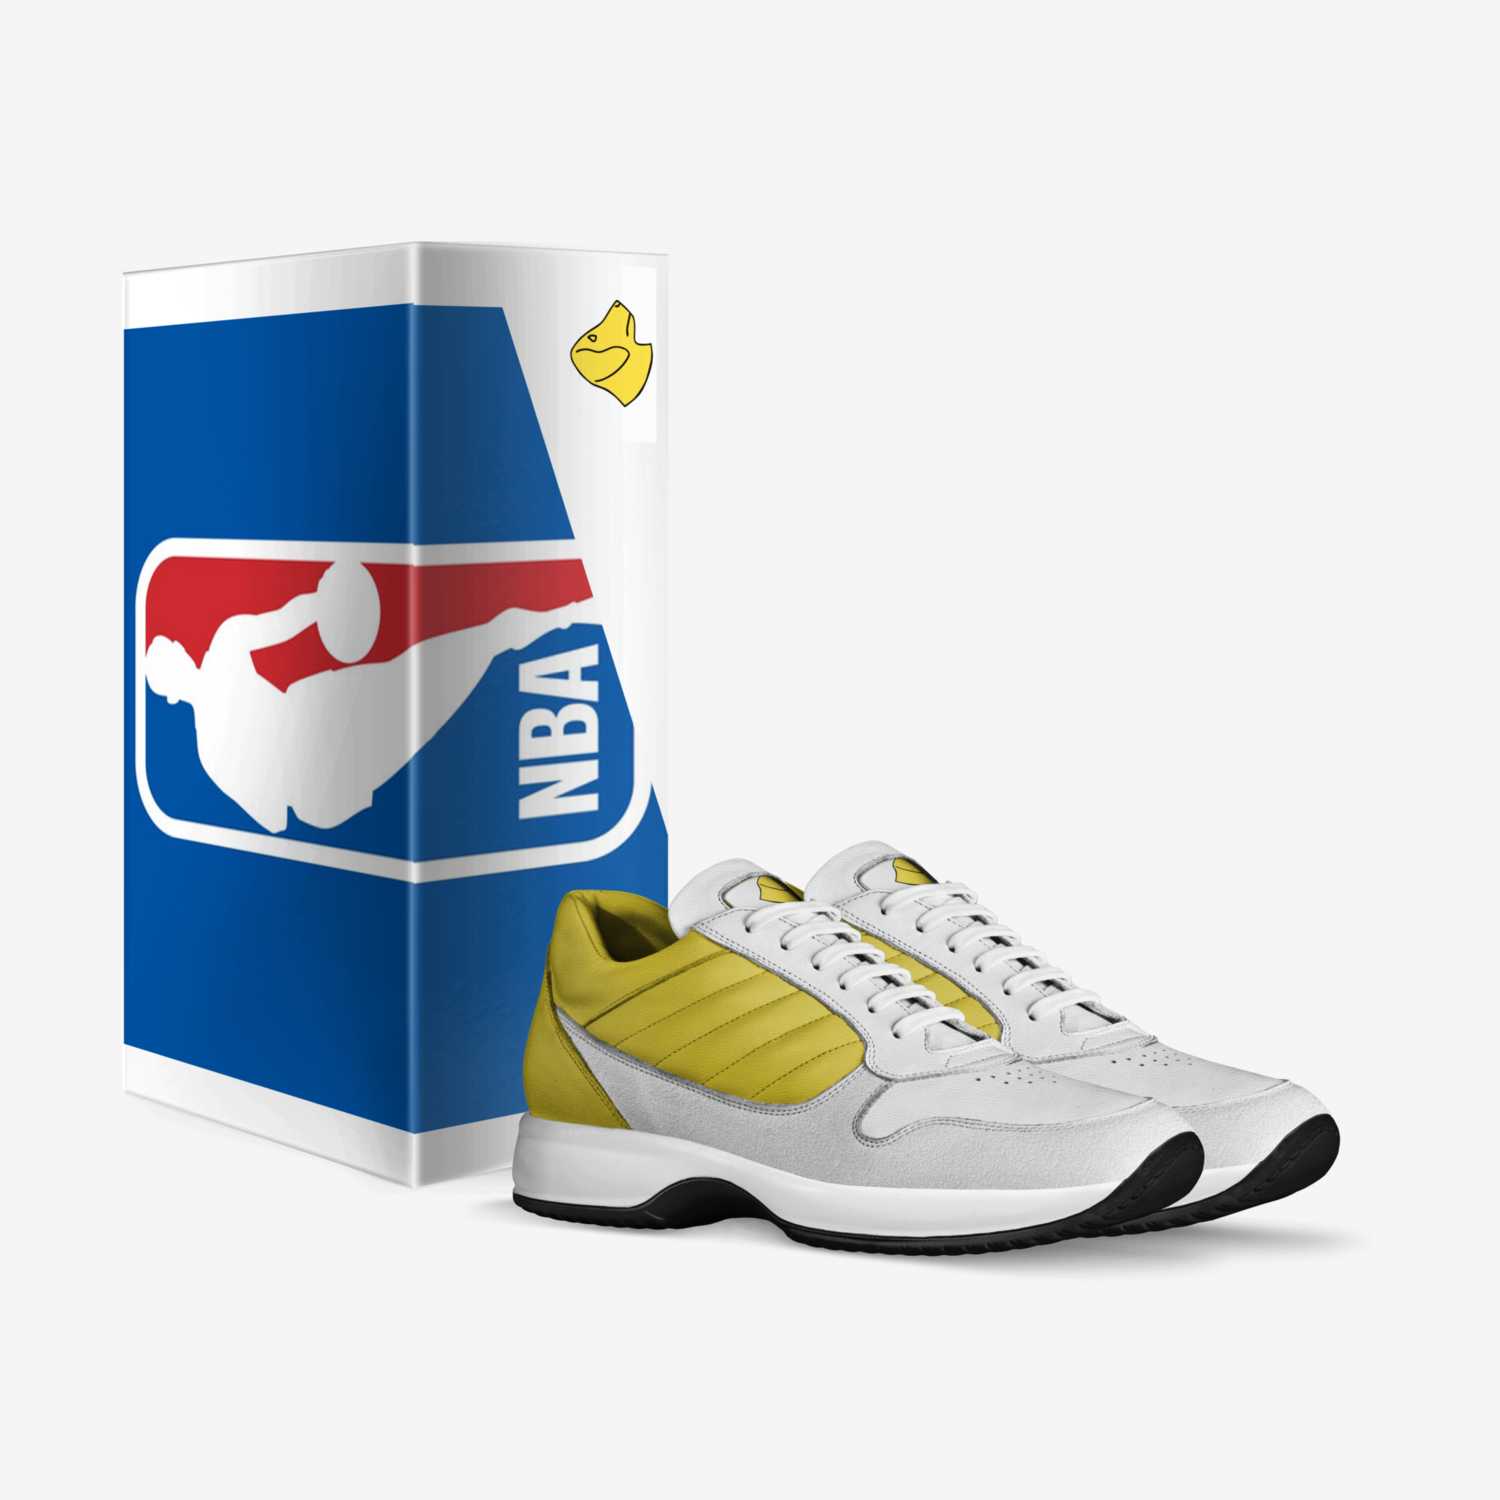 kris custom made in Italy shoes by Kris Duangnapa | Box view